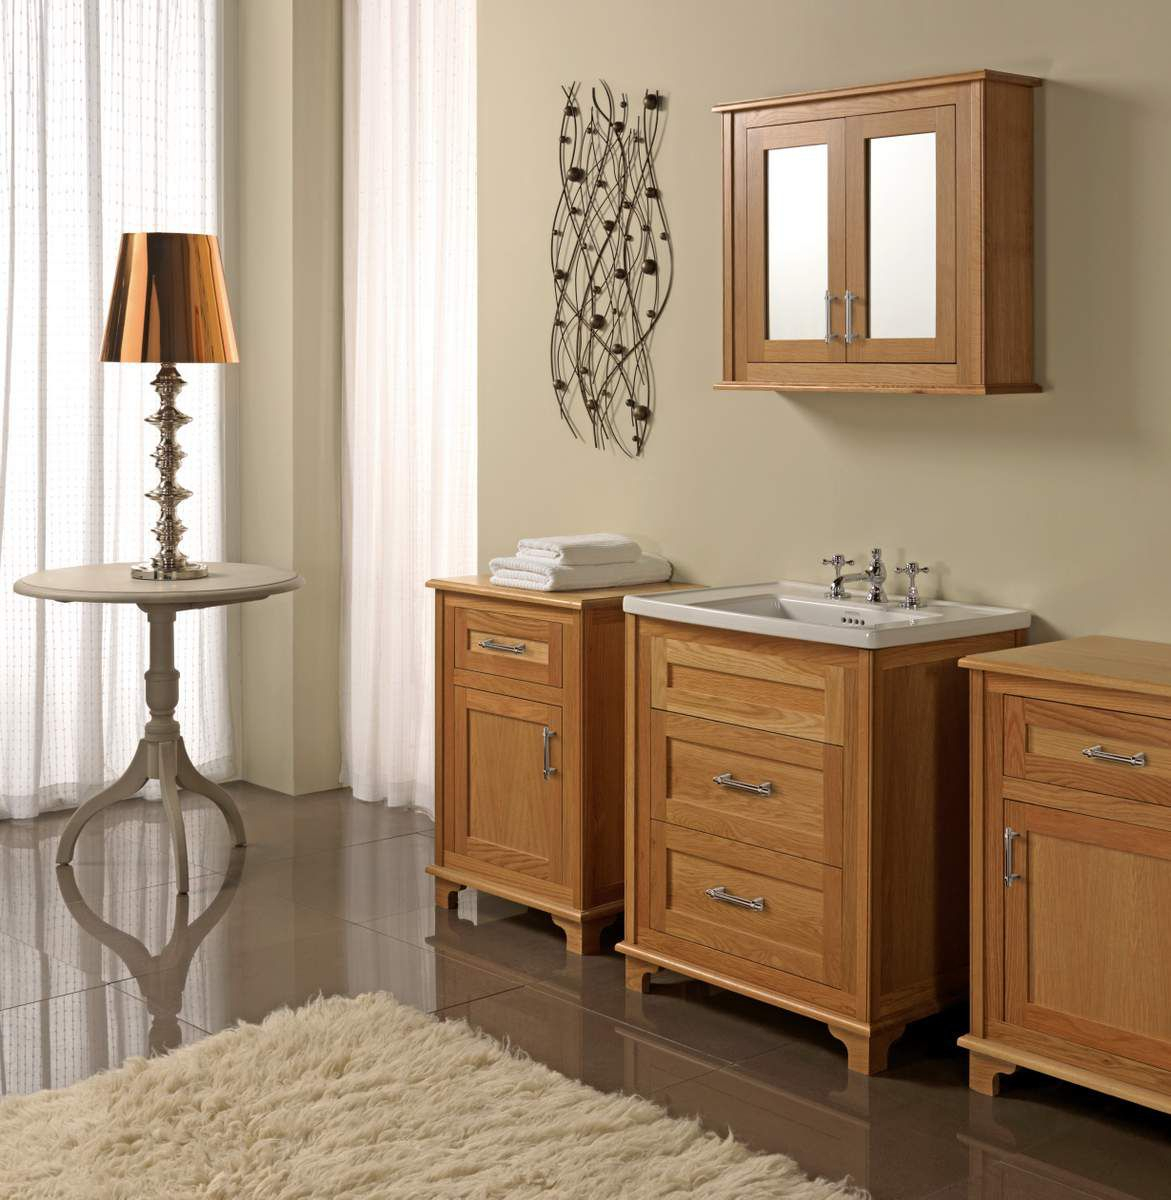 Bathroom Furniture Vanity Cabinets Cabinet Ideas regarding measurements 1171 X 1200